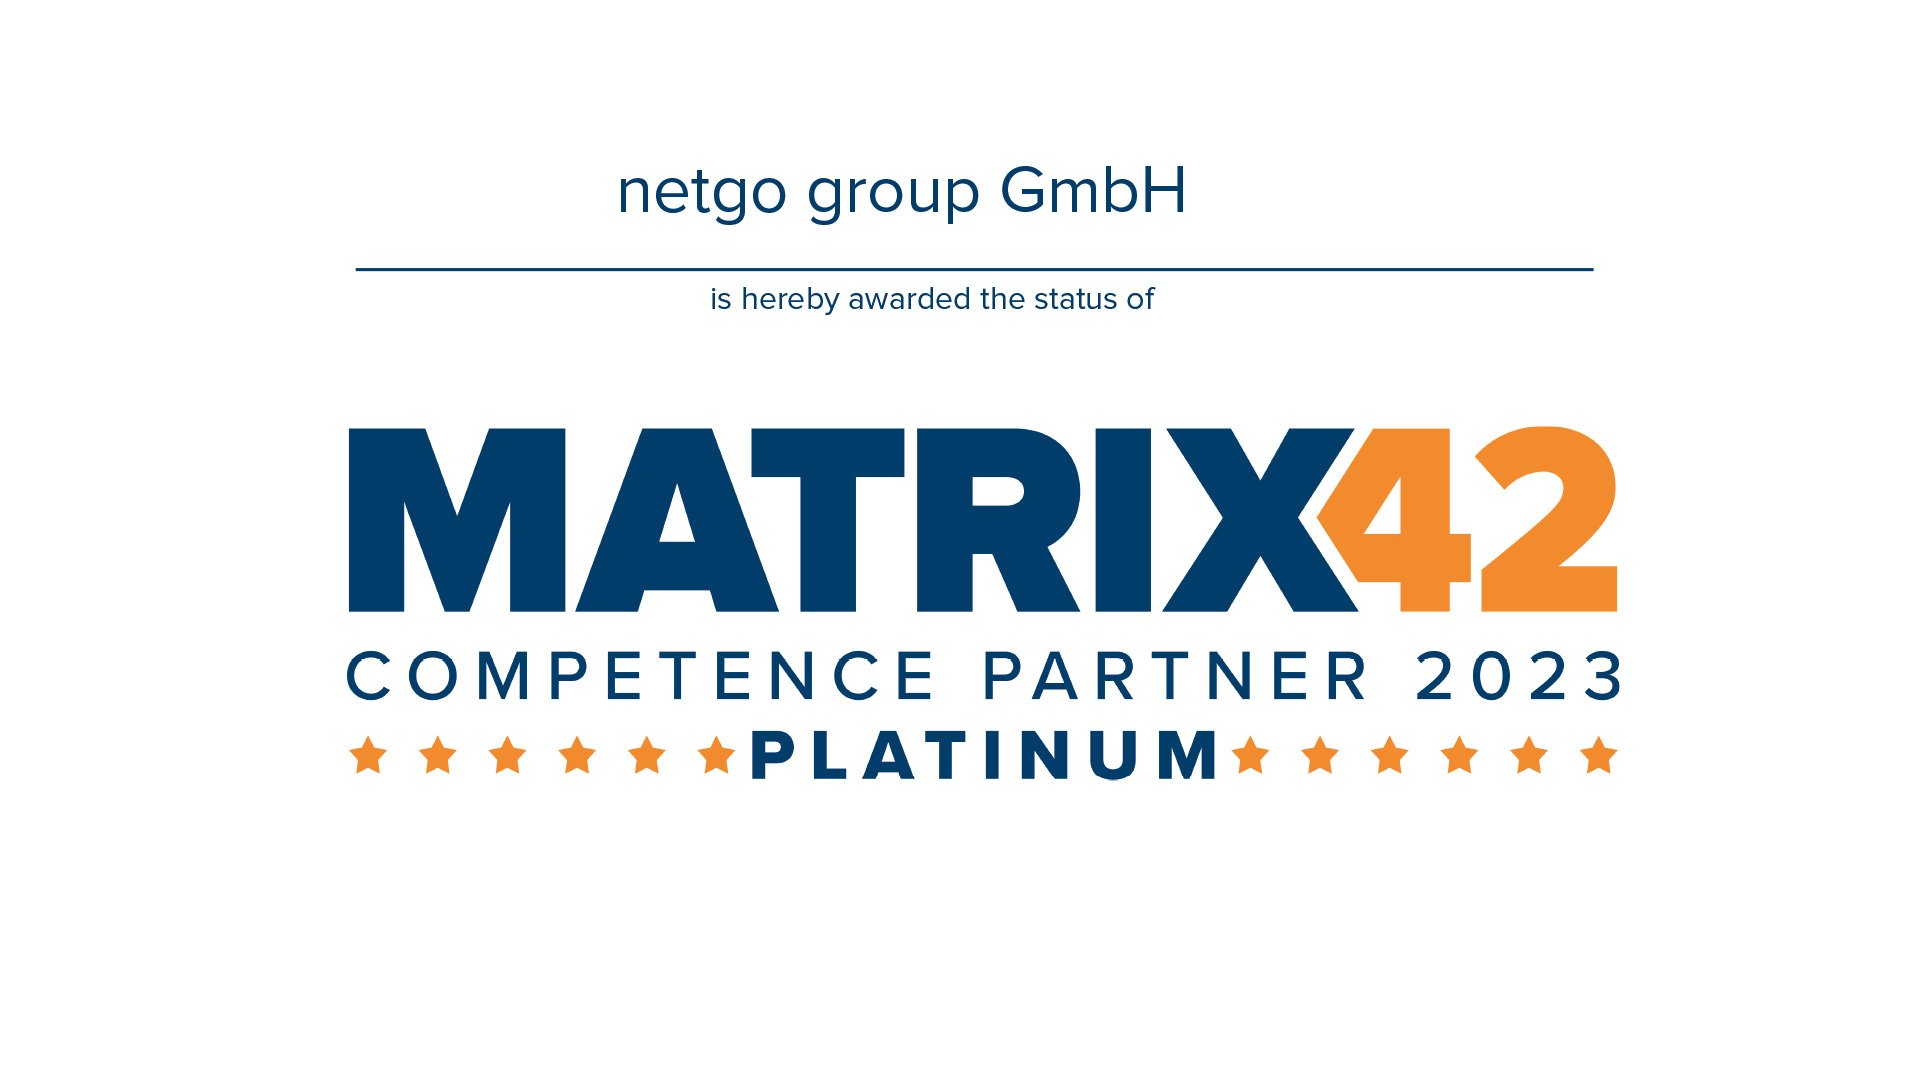 netgo ist Competence Partner Platinum bei Matrix42.